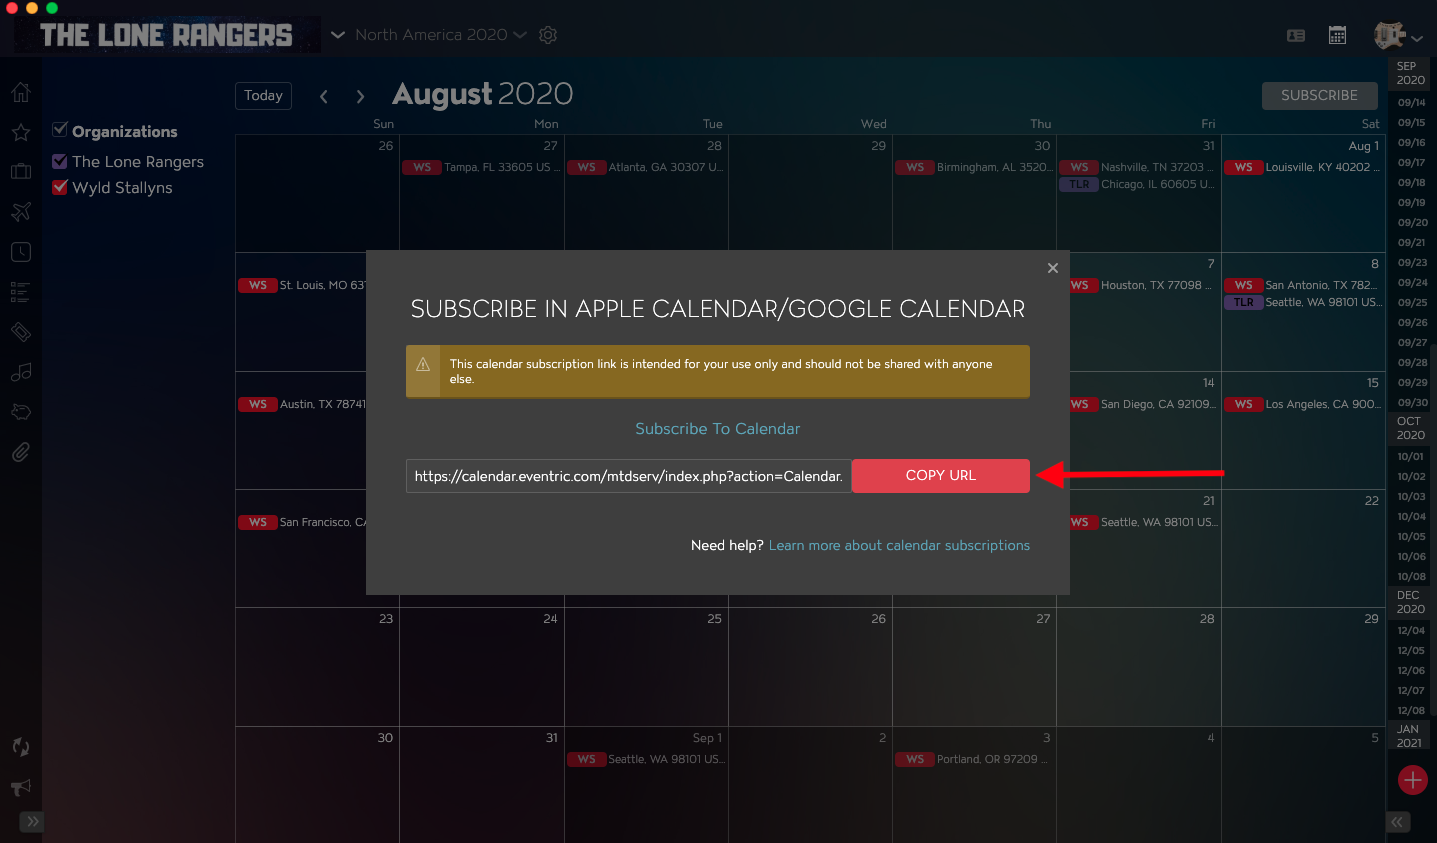 Subscribe Inter-Organization Calendar